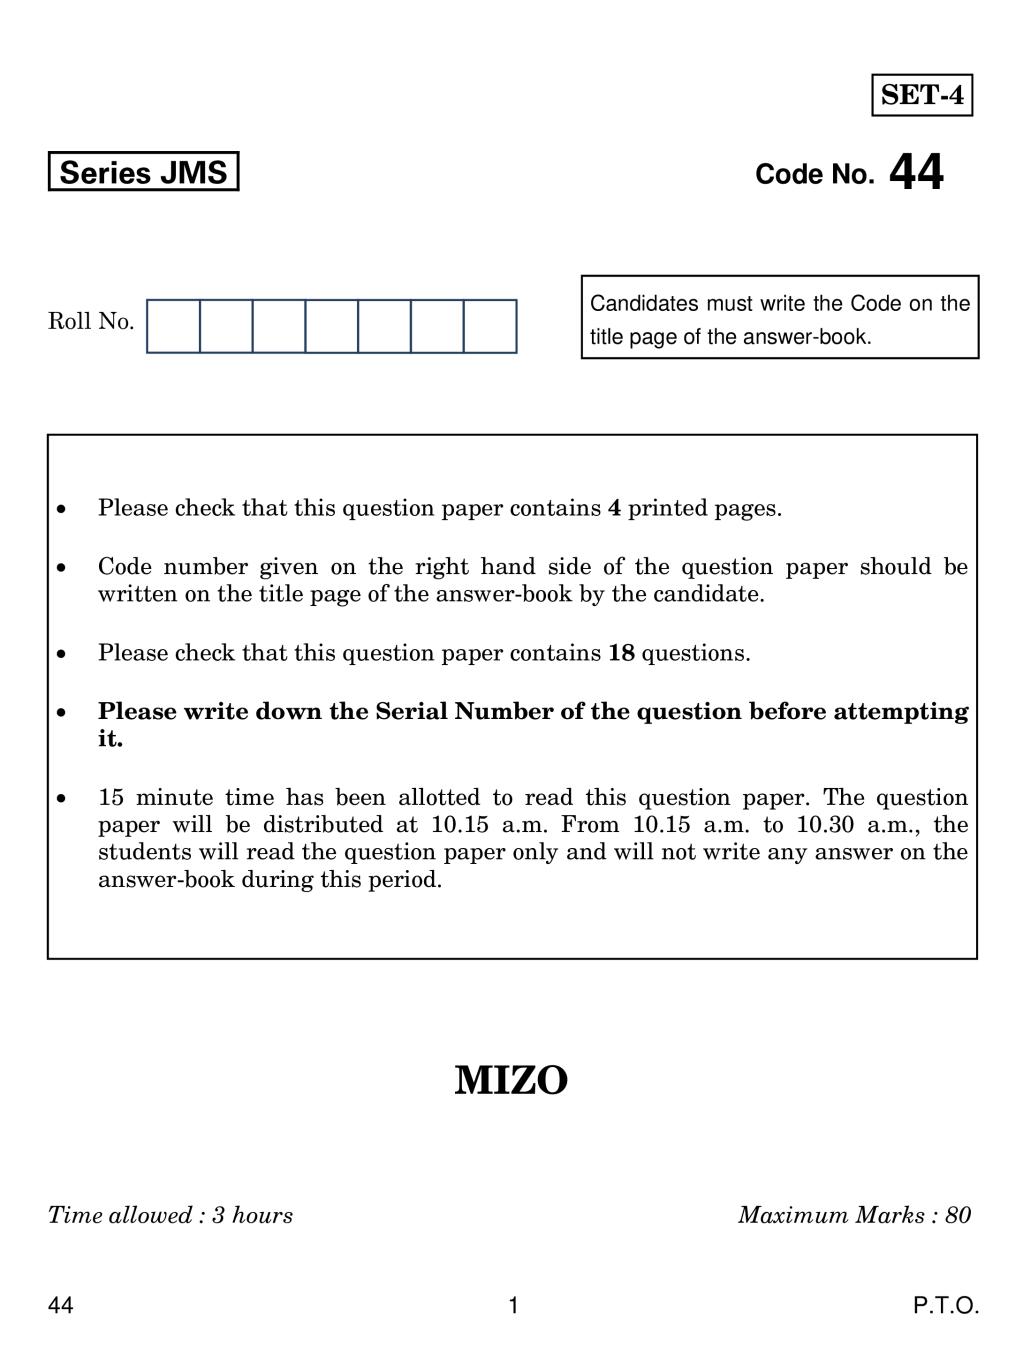 CBSE Class 10 Mizo Question Paper 2019 - Page 1